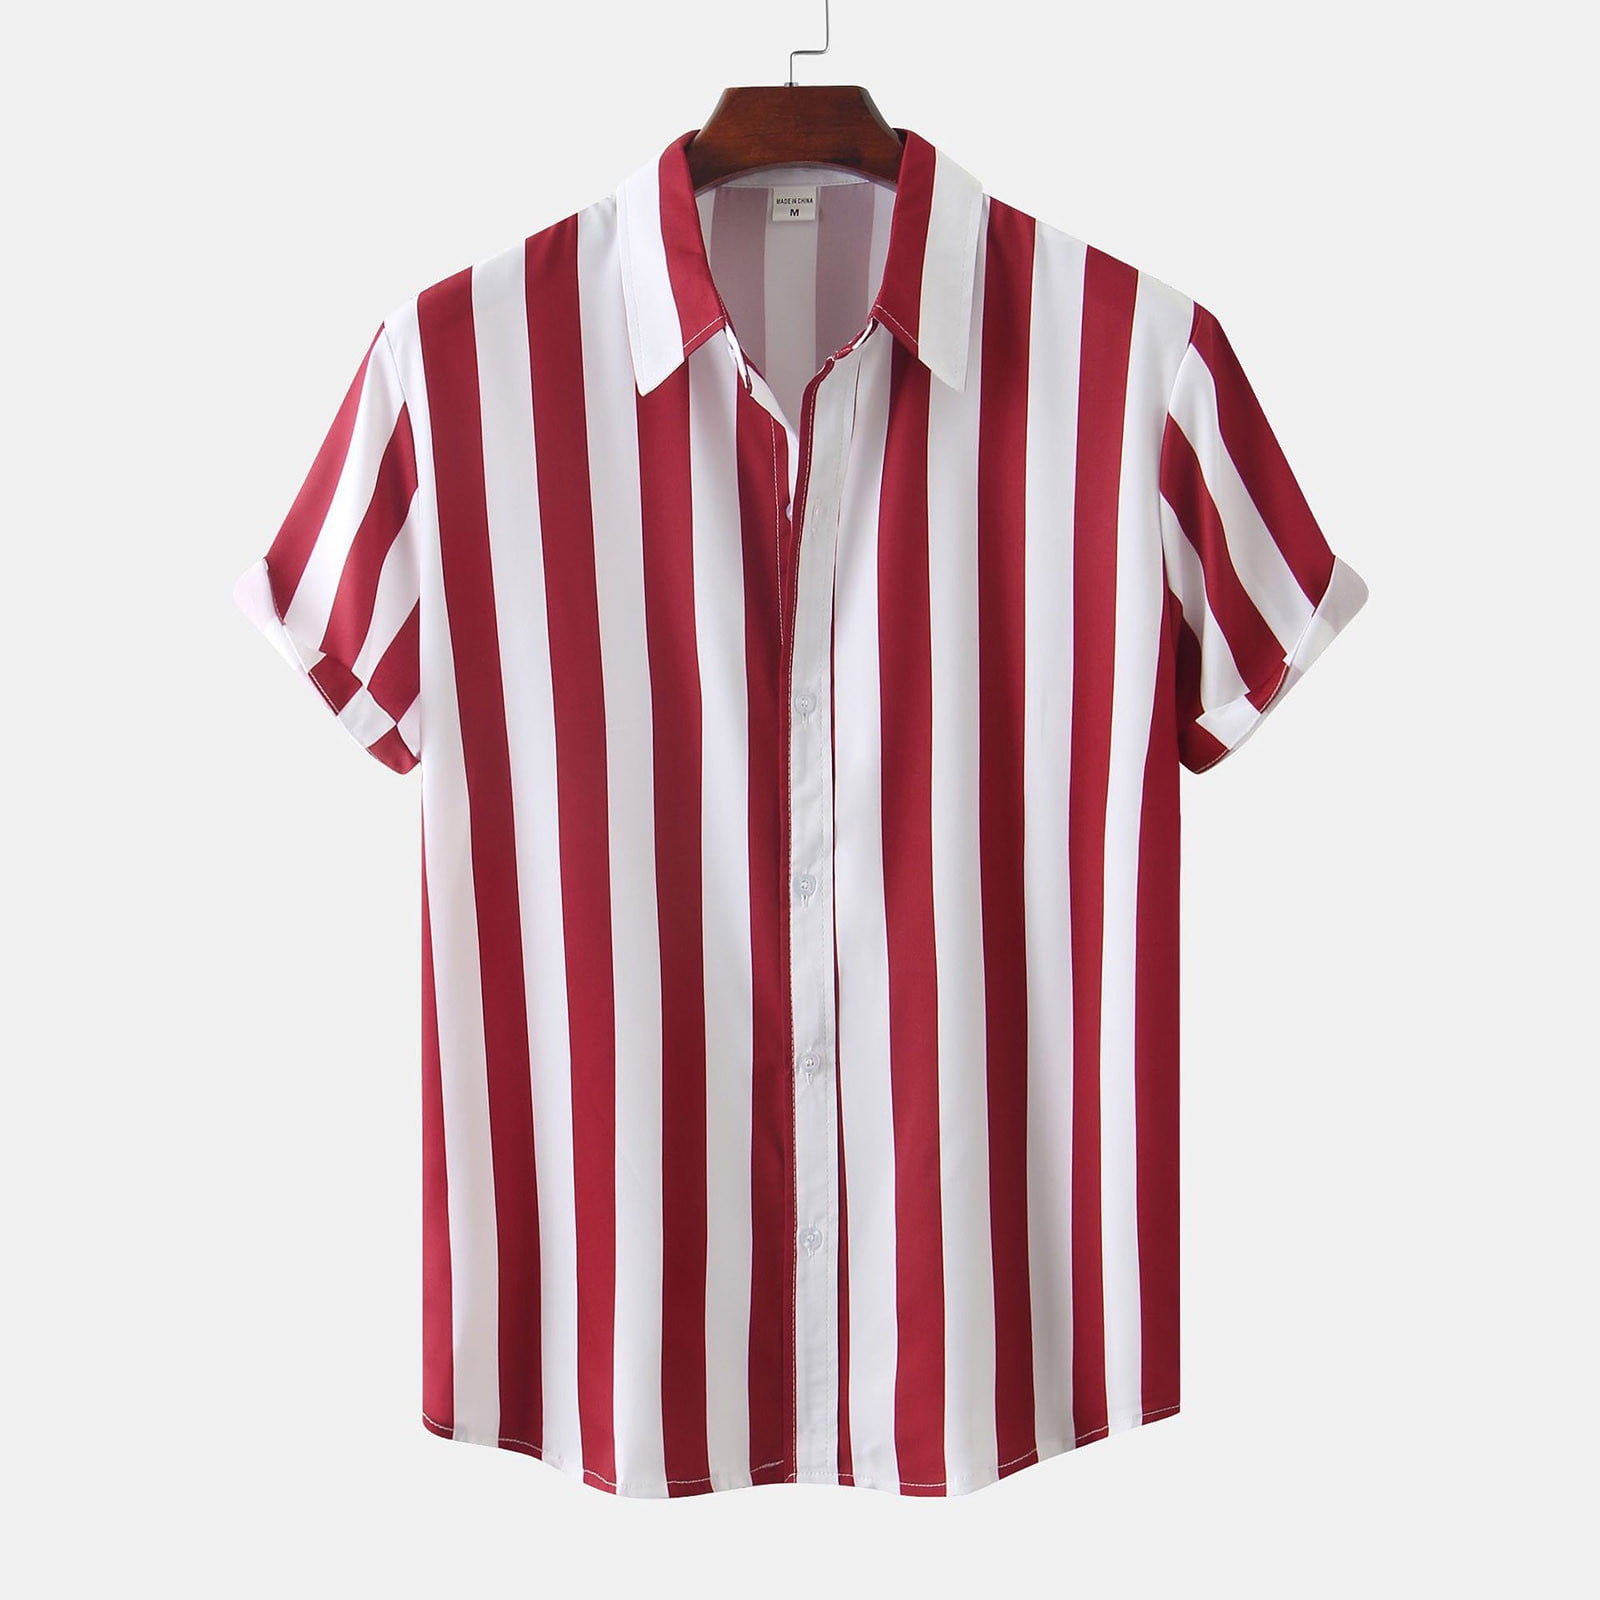 ZXHACSJ Men's Hawaiian Casual Striped Print Top Loose Comfort Short Sleeve  Shirt Red L